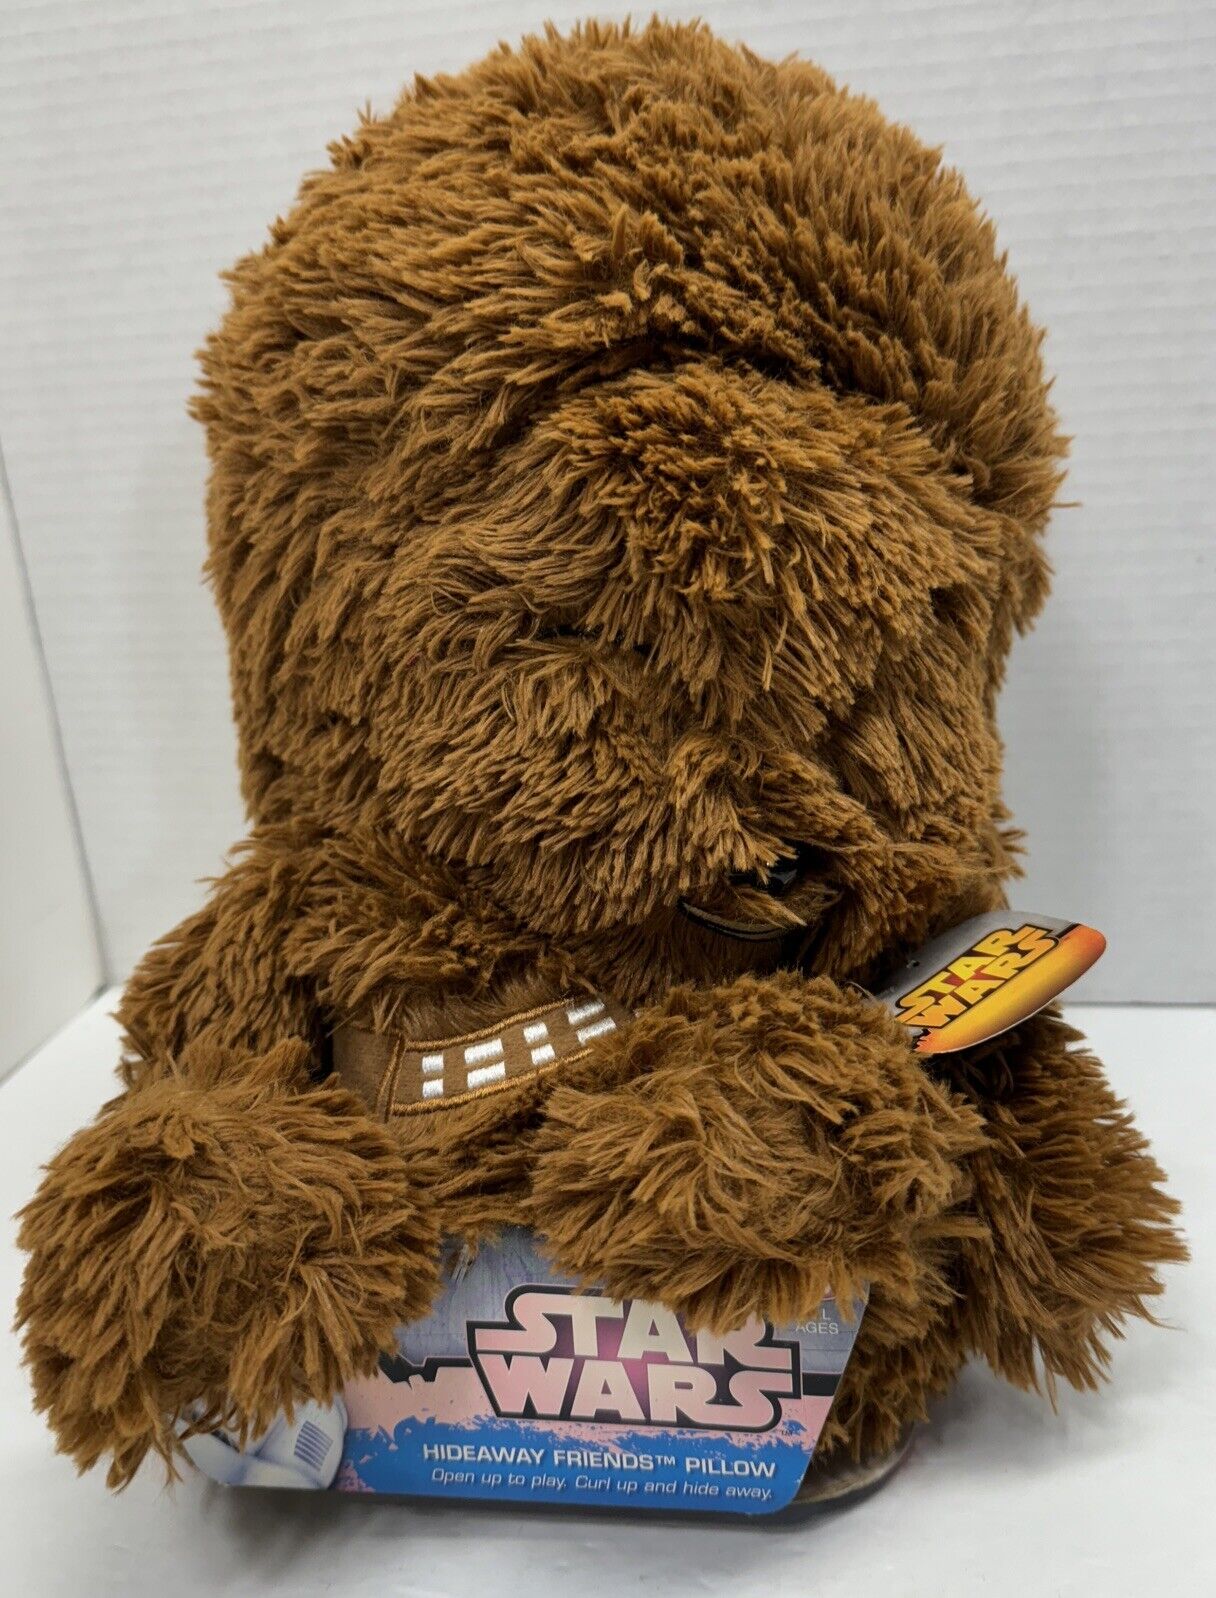 Star Wars Disney Chewbacca Hideaway Friends Pillow Plush New In Packaging